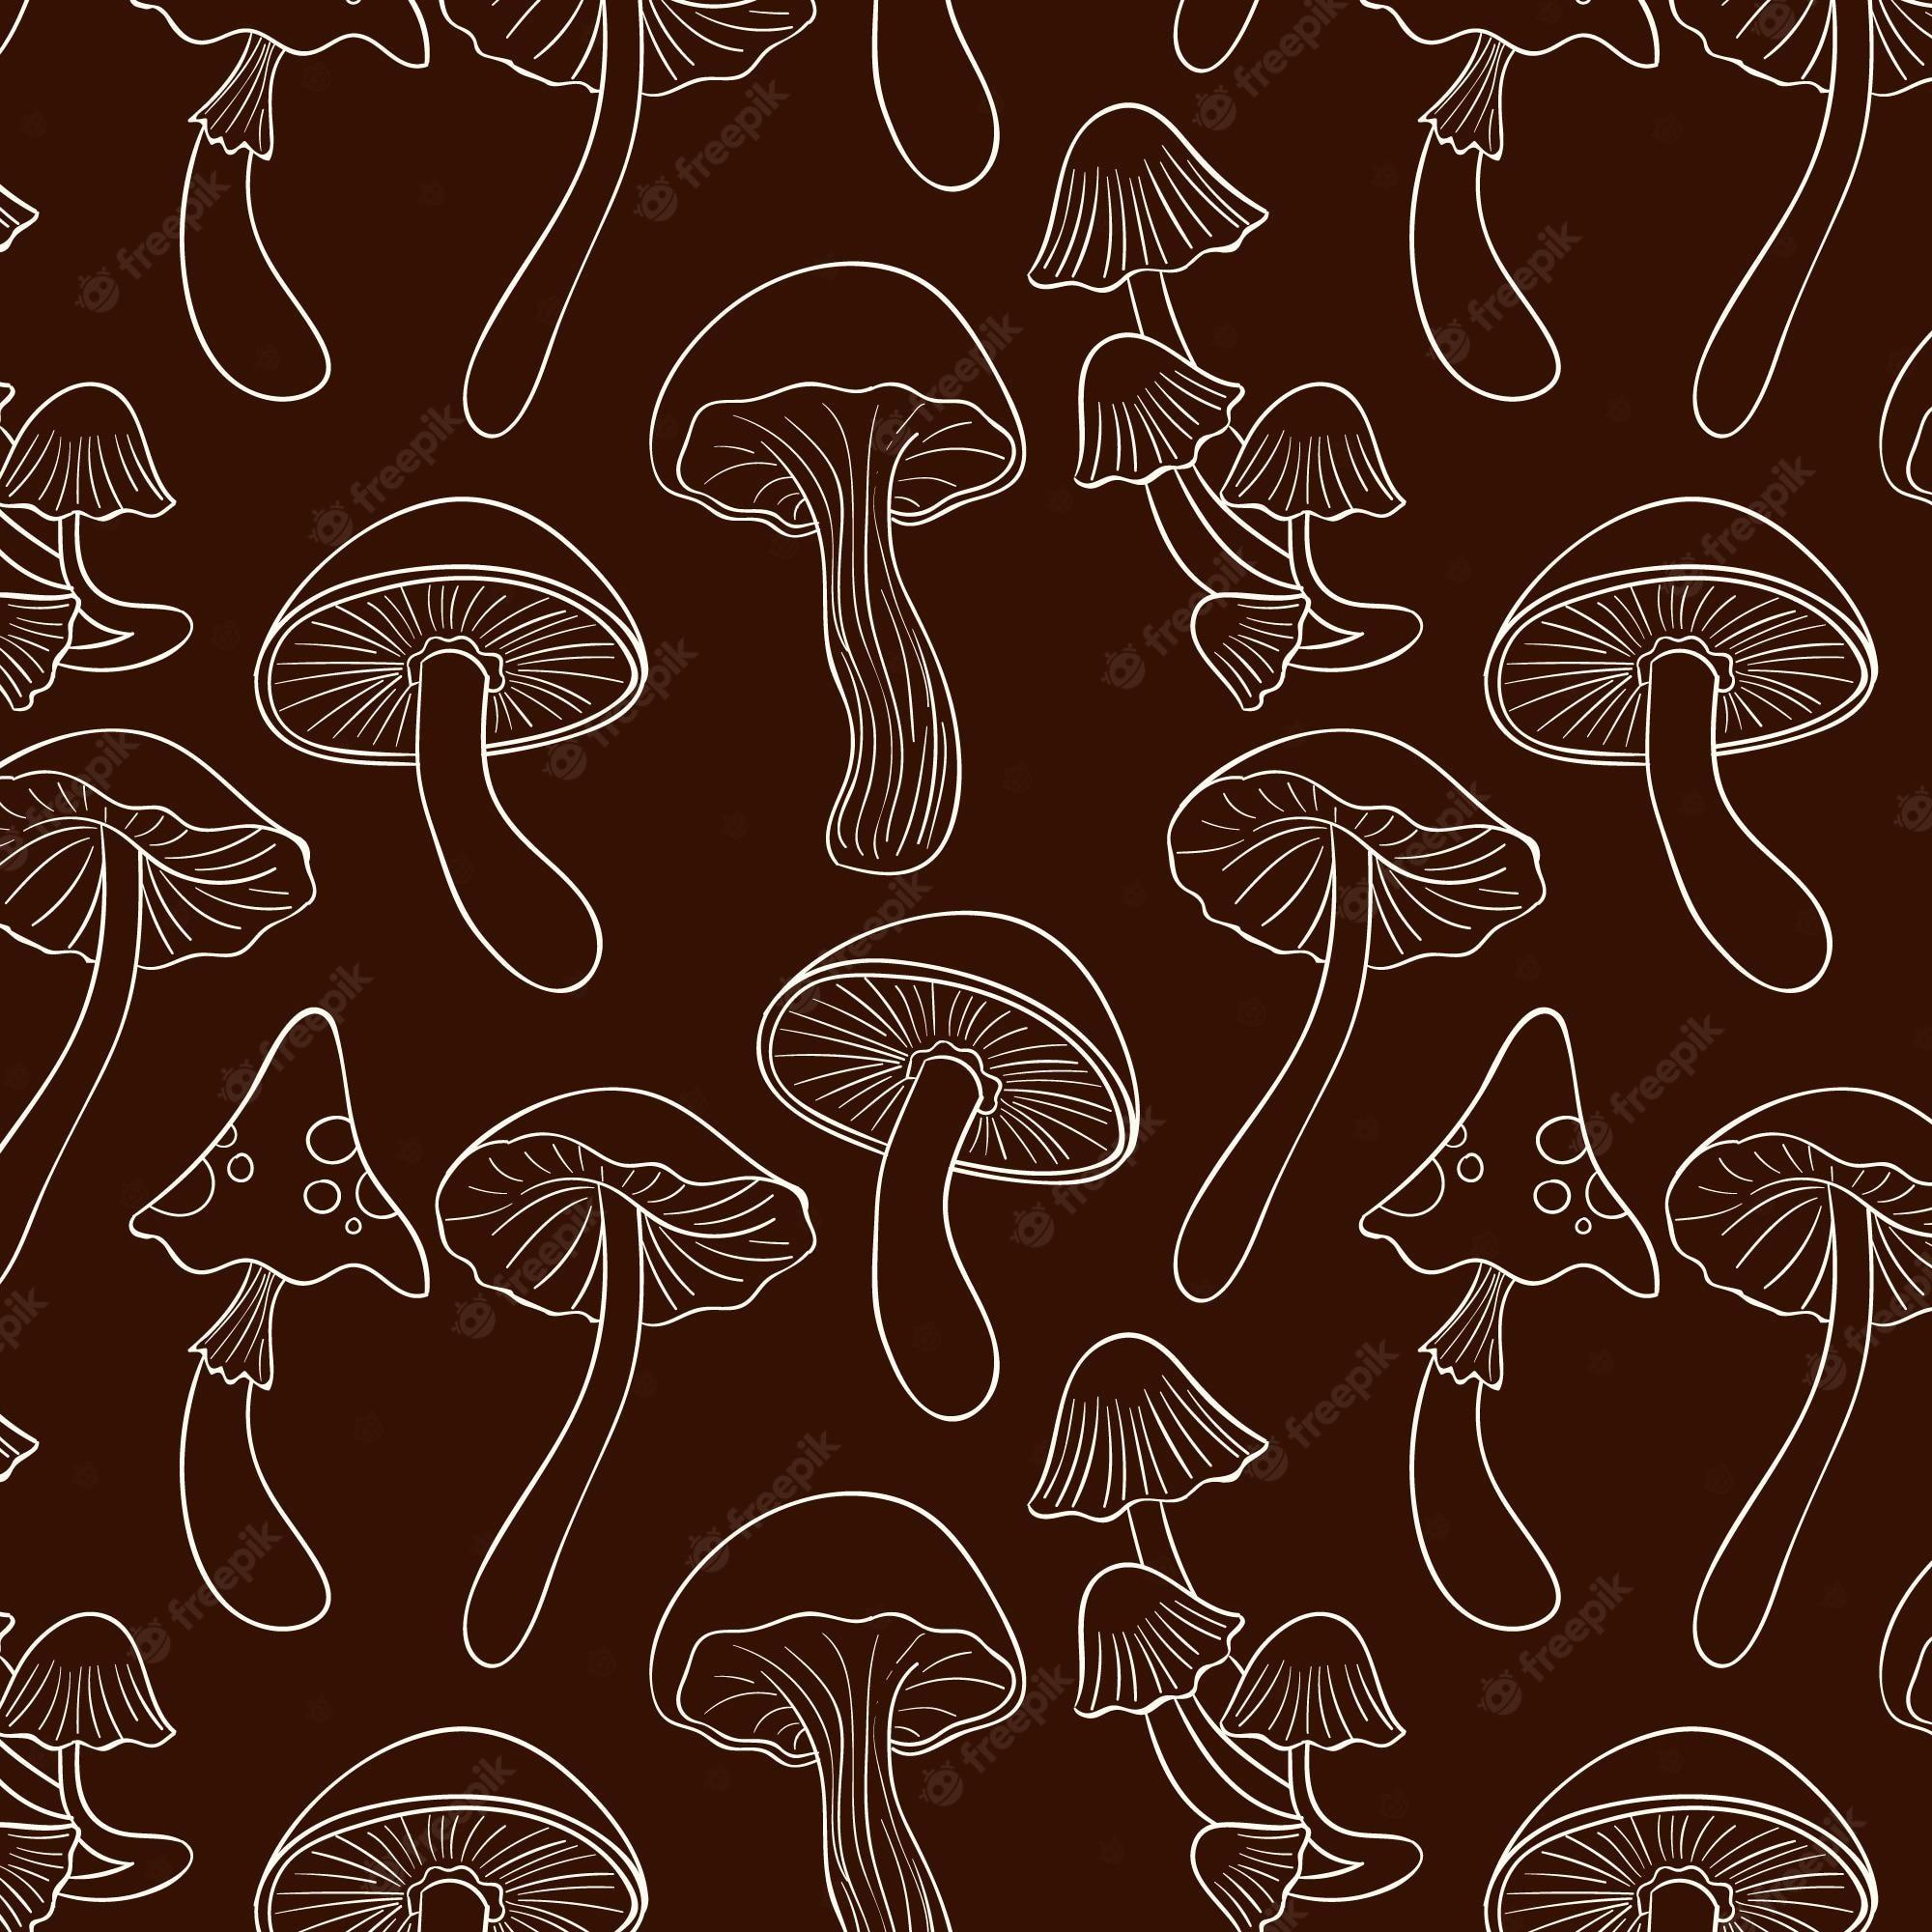 33 Kawaii Mushroom Wallpapers  WallpaperSafari